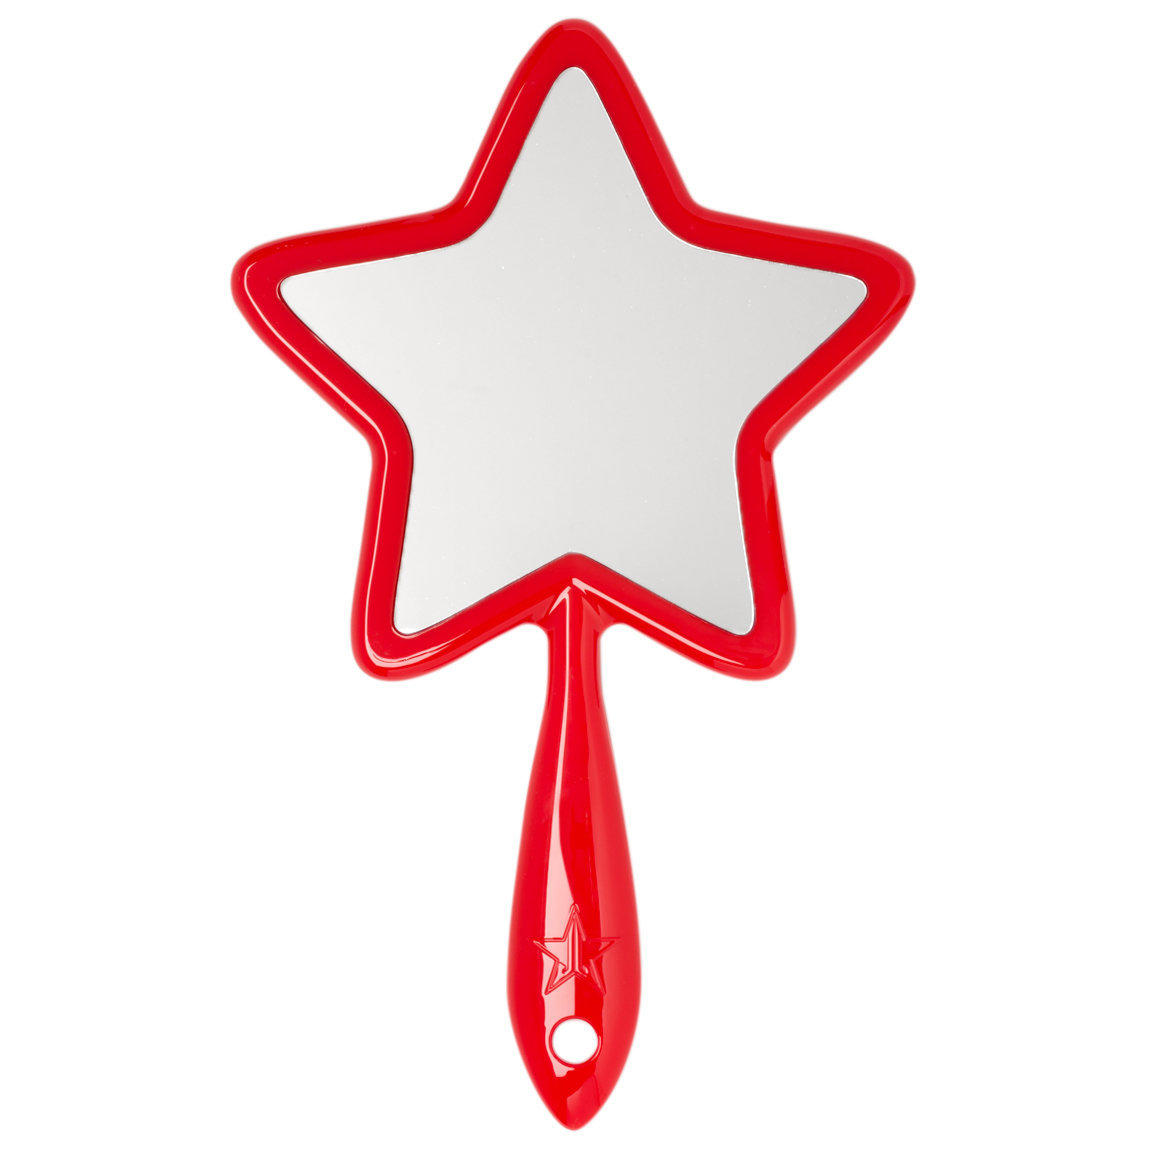 Jeffree Star Handheld Mirror Red Star Edition